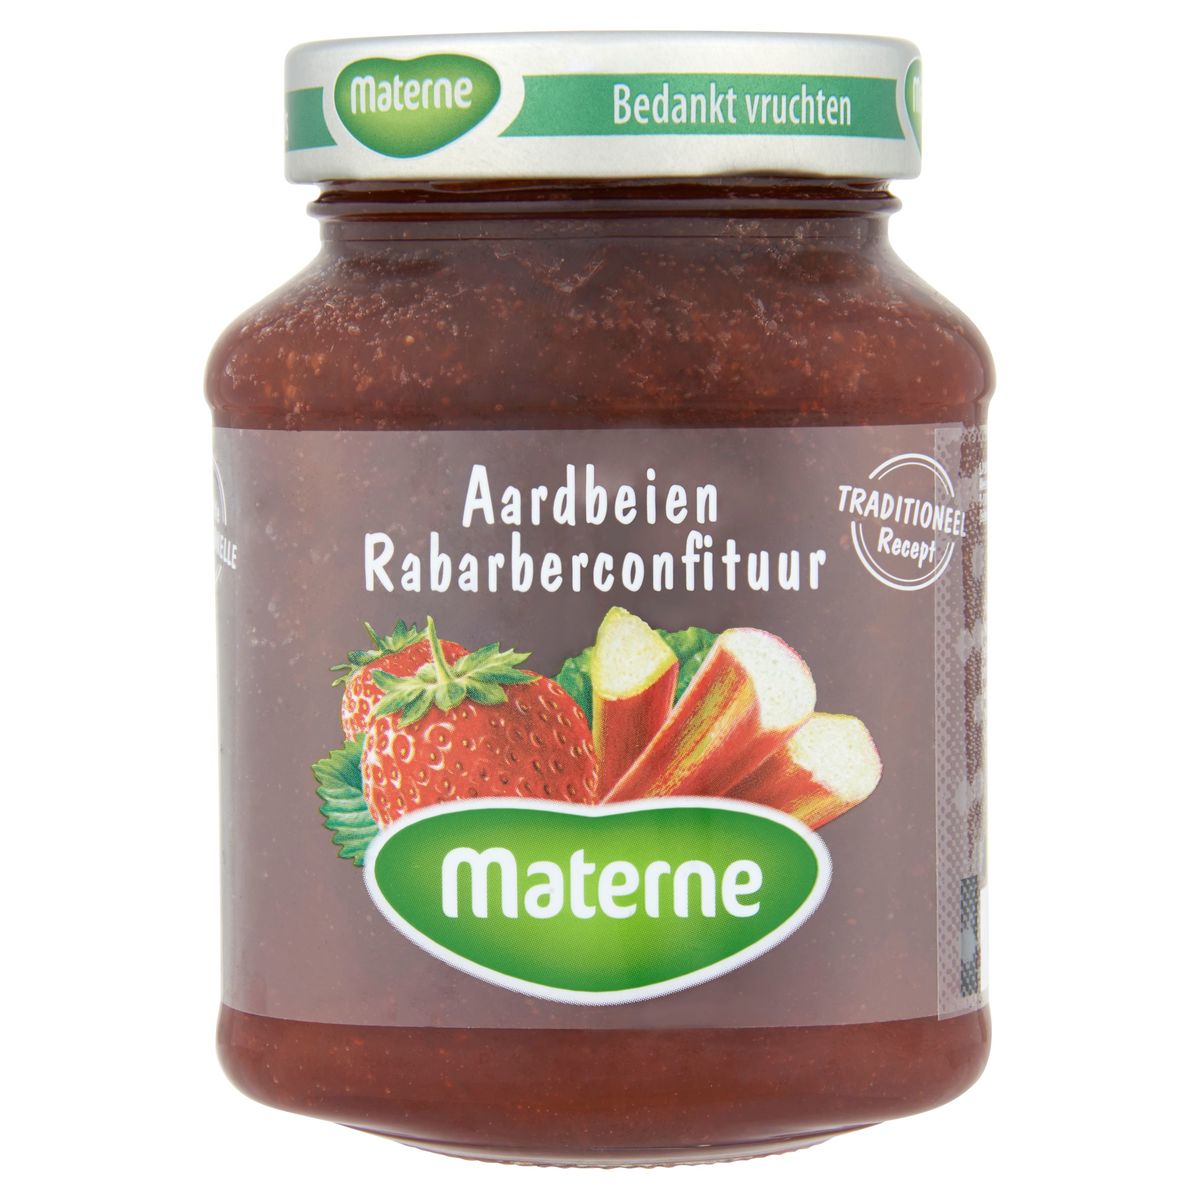 Materne Confiture de Fraises & Rhubarbe 450 g